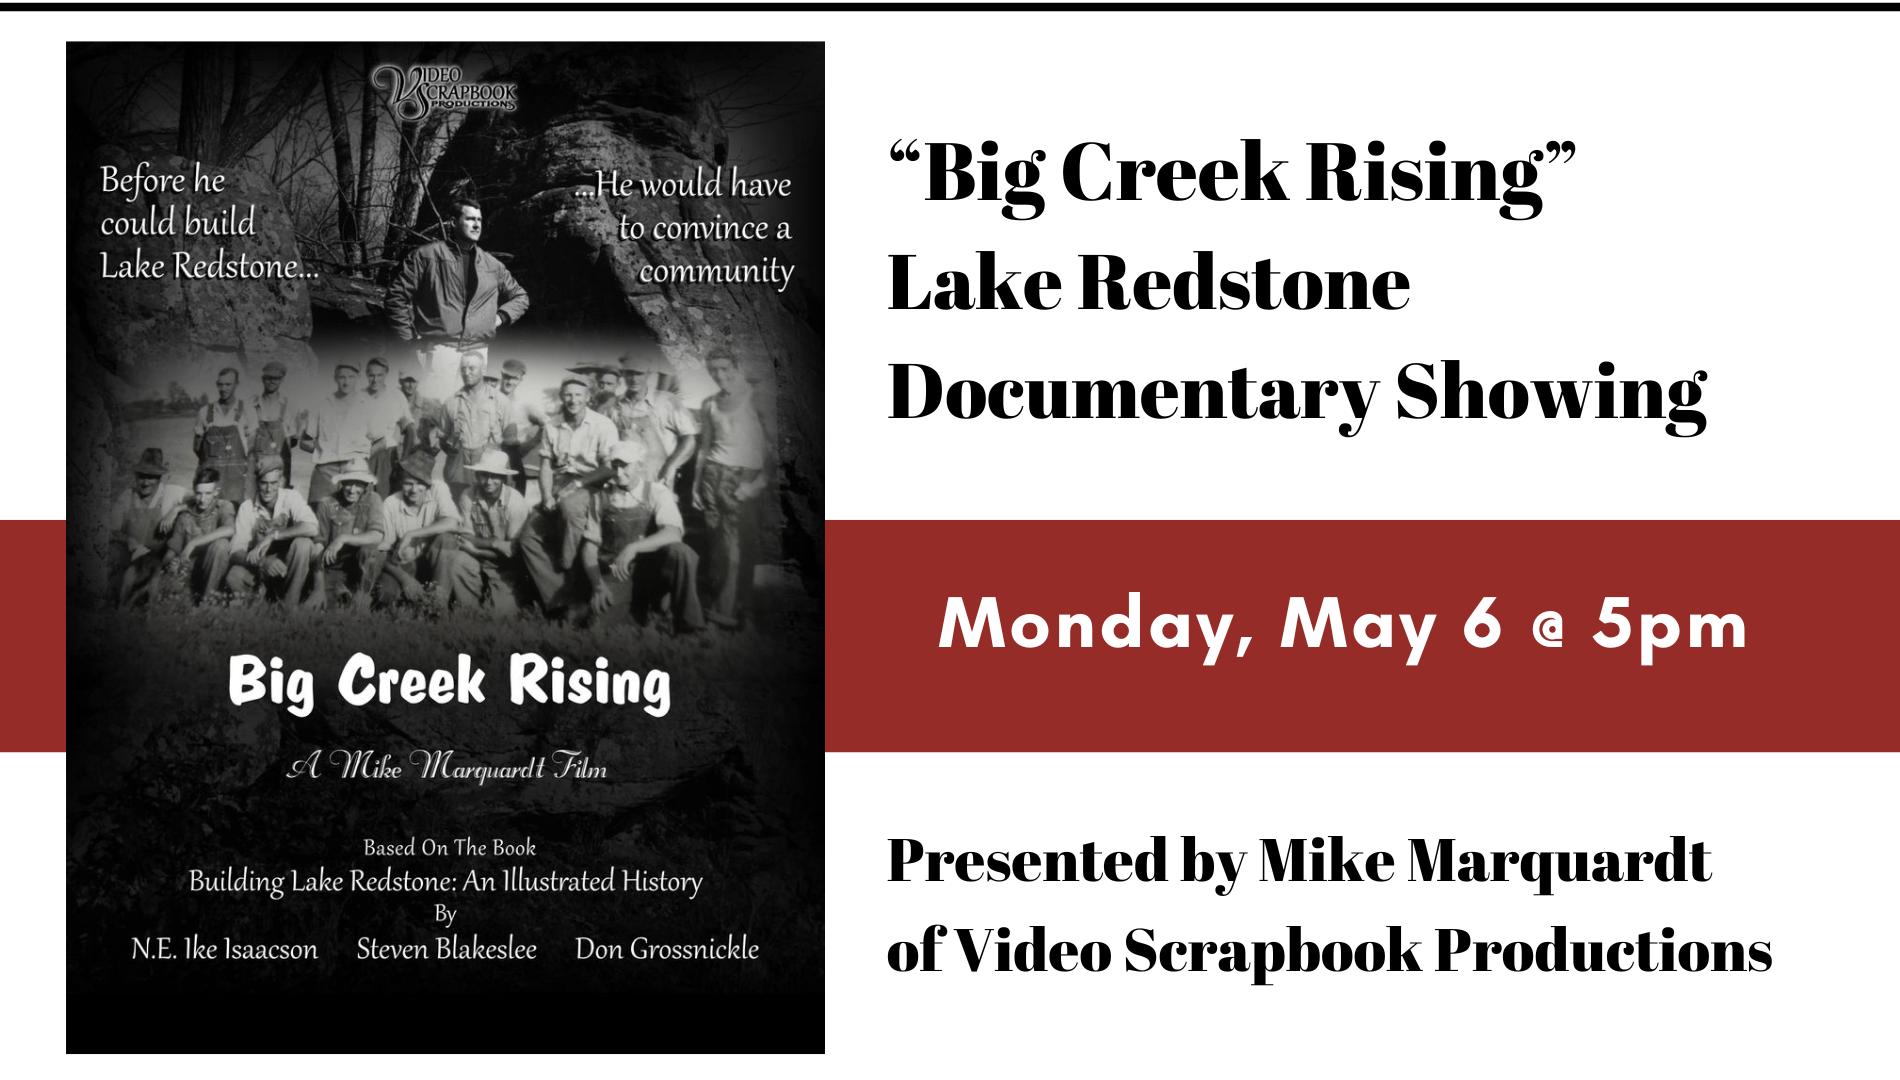 "Big Creek Rising" Film Documentary